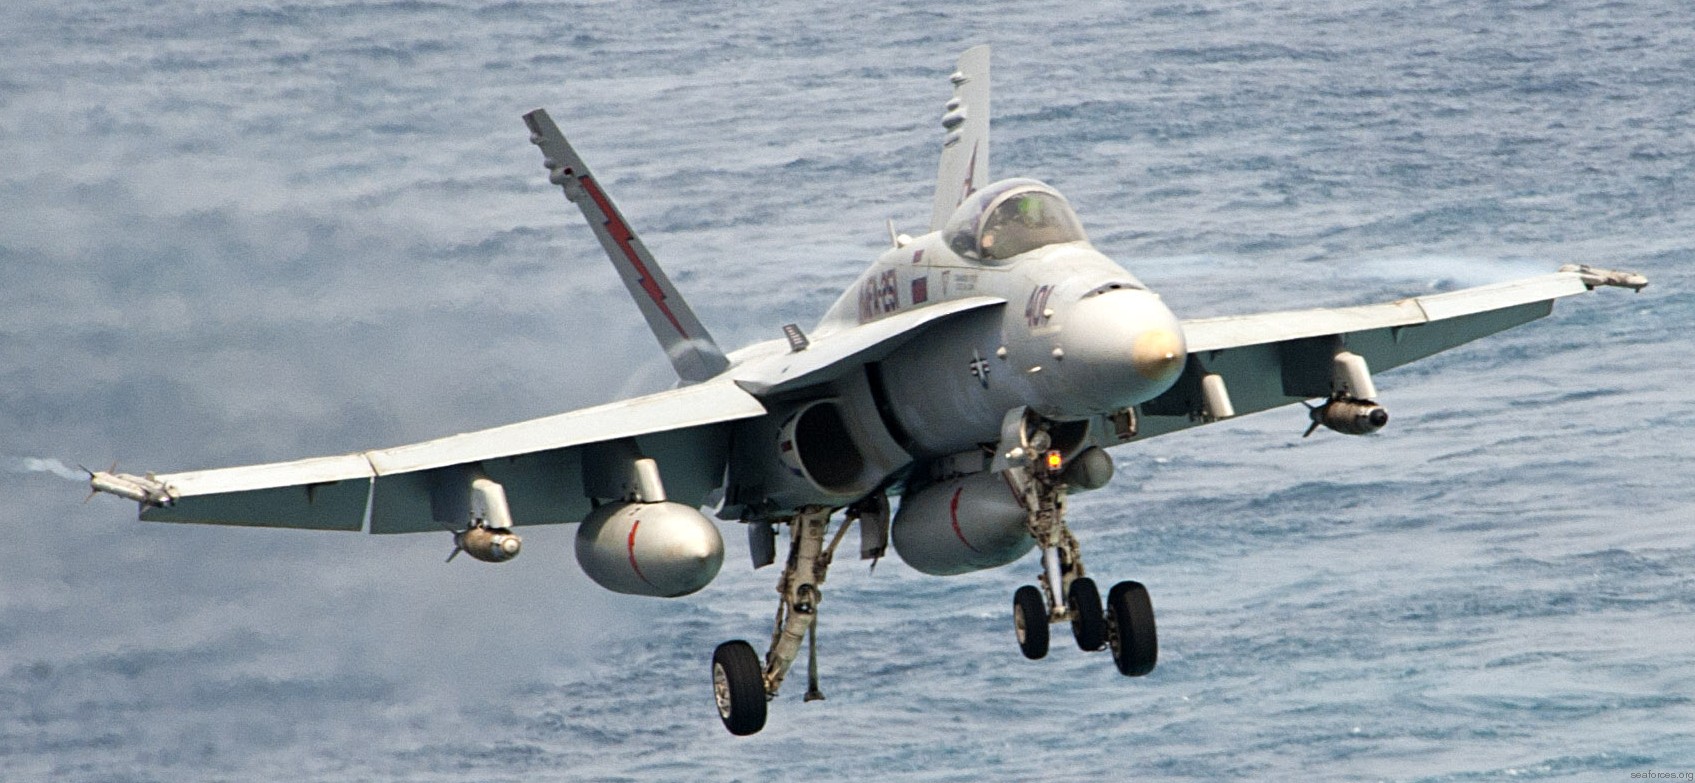 vmfa-251 thunderbolts marine fighter attack squadron f/a-18c hornet cvw-1 uss enterprise cvn-65 25